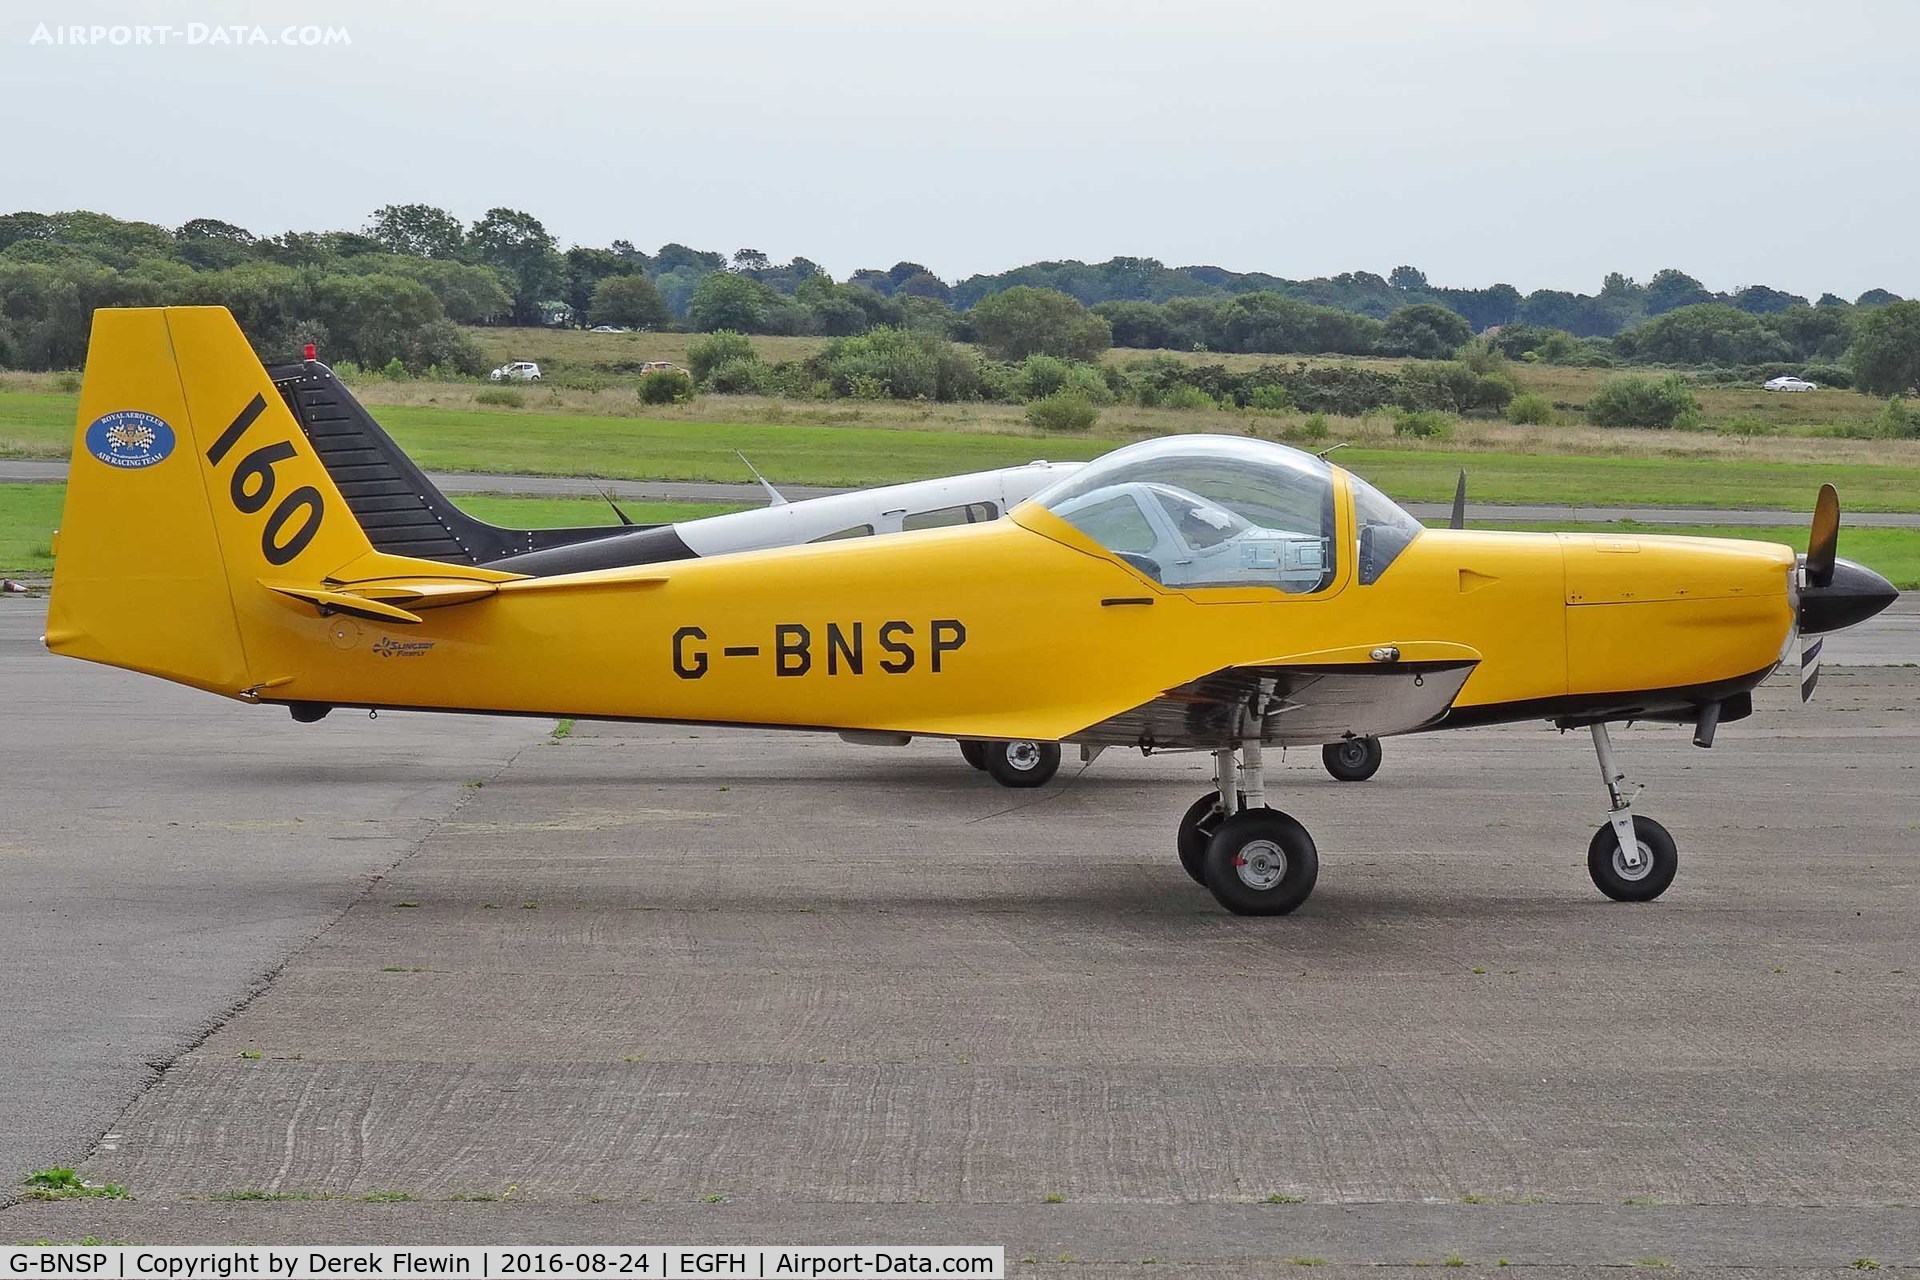 G-BNSP, 1987 Slingsby T-67M Firefly Mk2 C/N 2044, Firefly, Turweston Flying Club Ltd Turweston Aerodrome Buckinhamshire based, seen parked up.